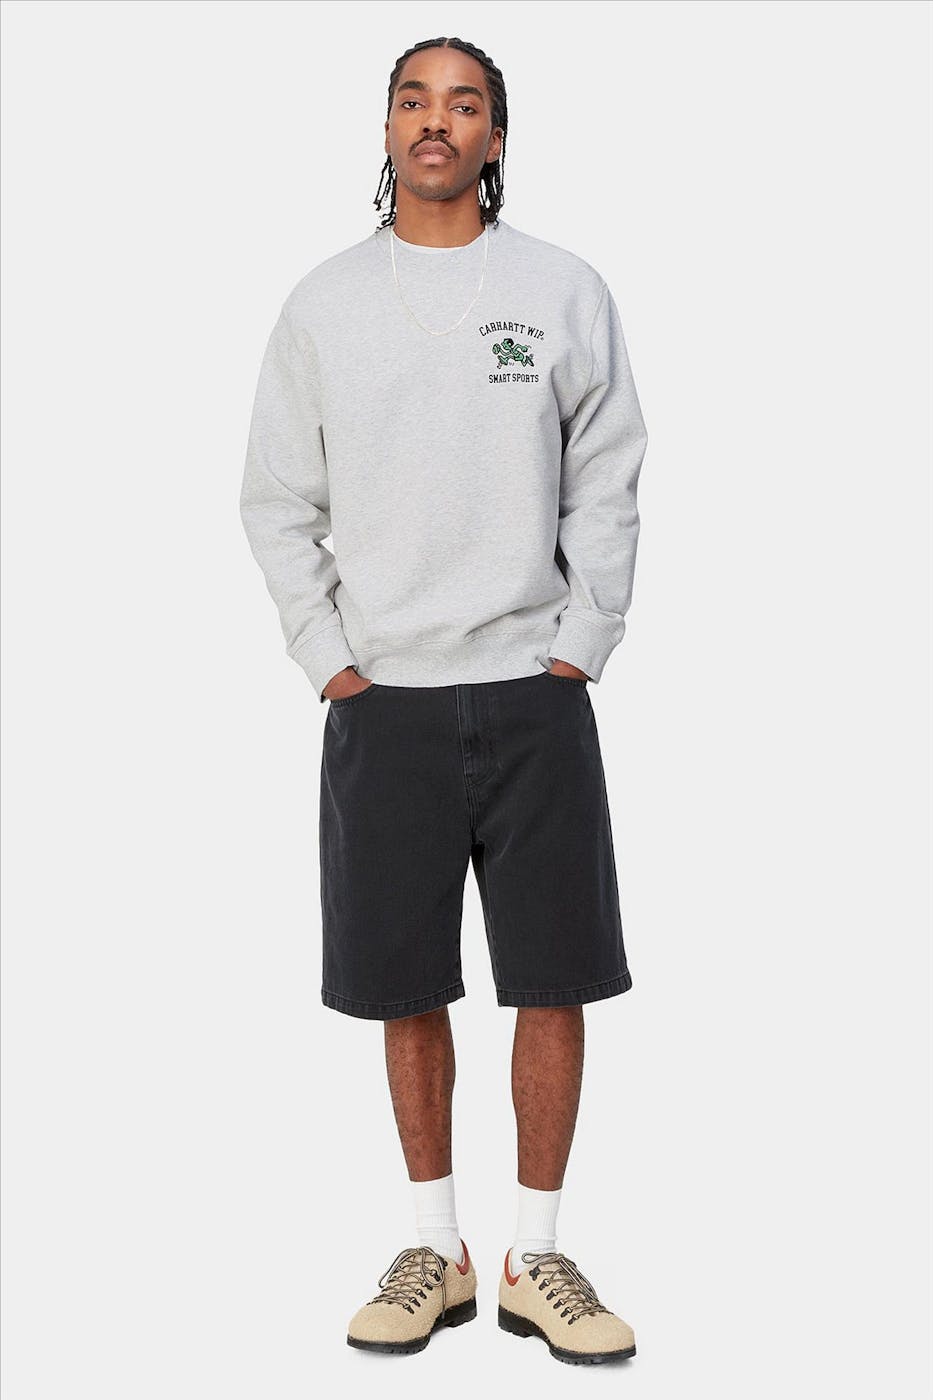 Carhartt WIP - Lichtgrijze Smart Sports sweater